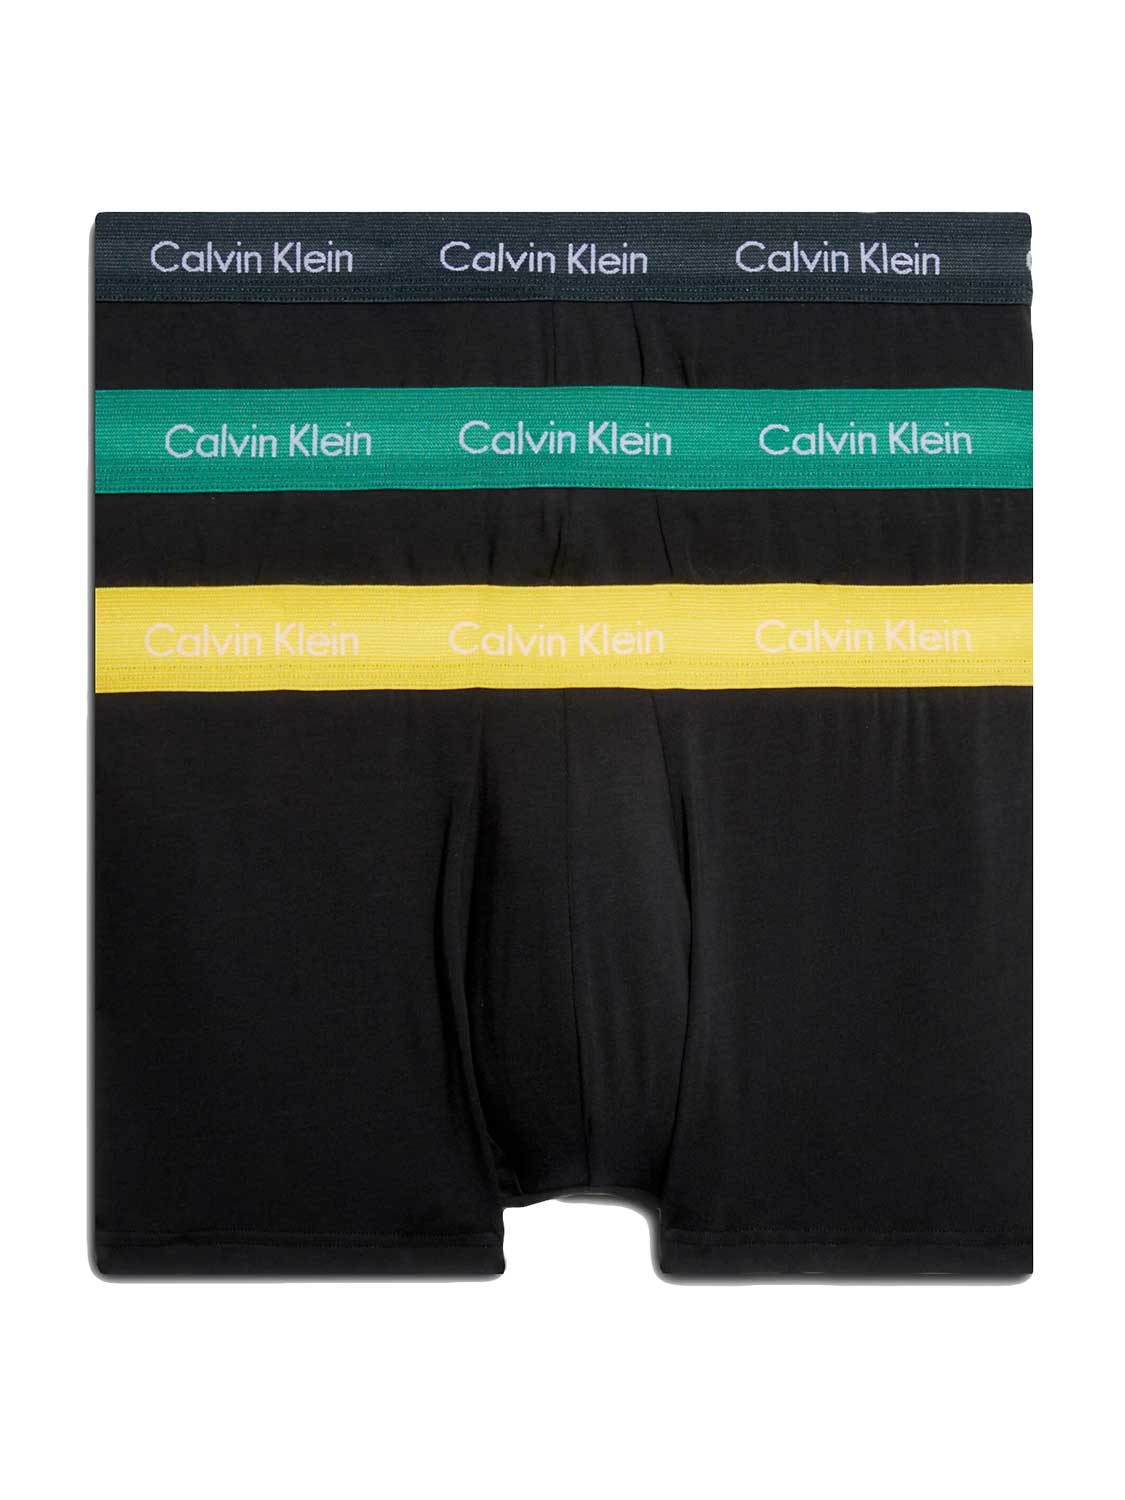 Calvin Klein low rise trunks (3-pack) - lage heren boxers kort - zwart met gekleurde tailleband - Maat: XL